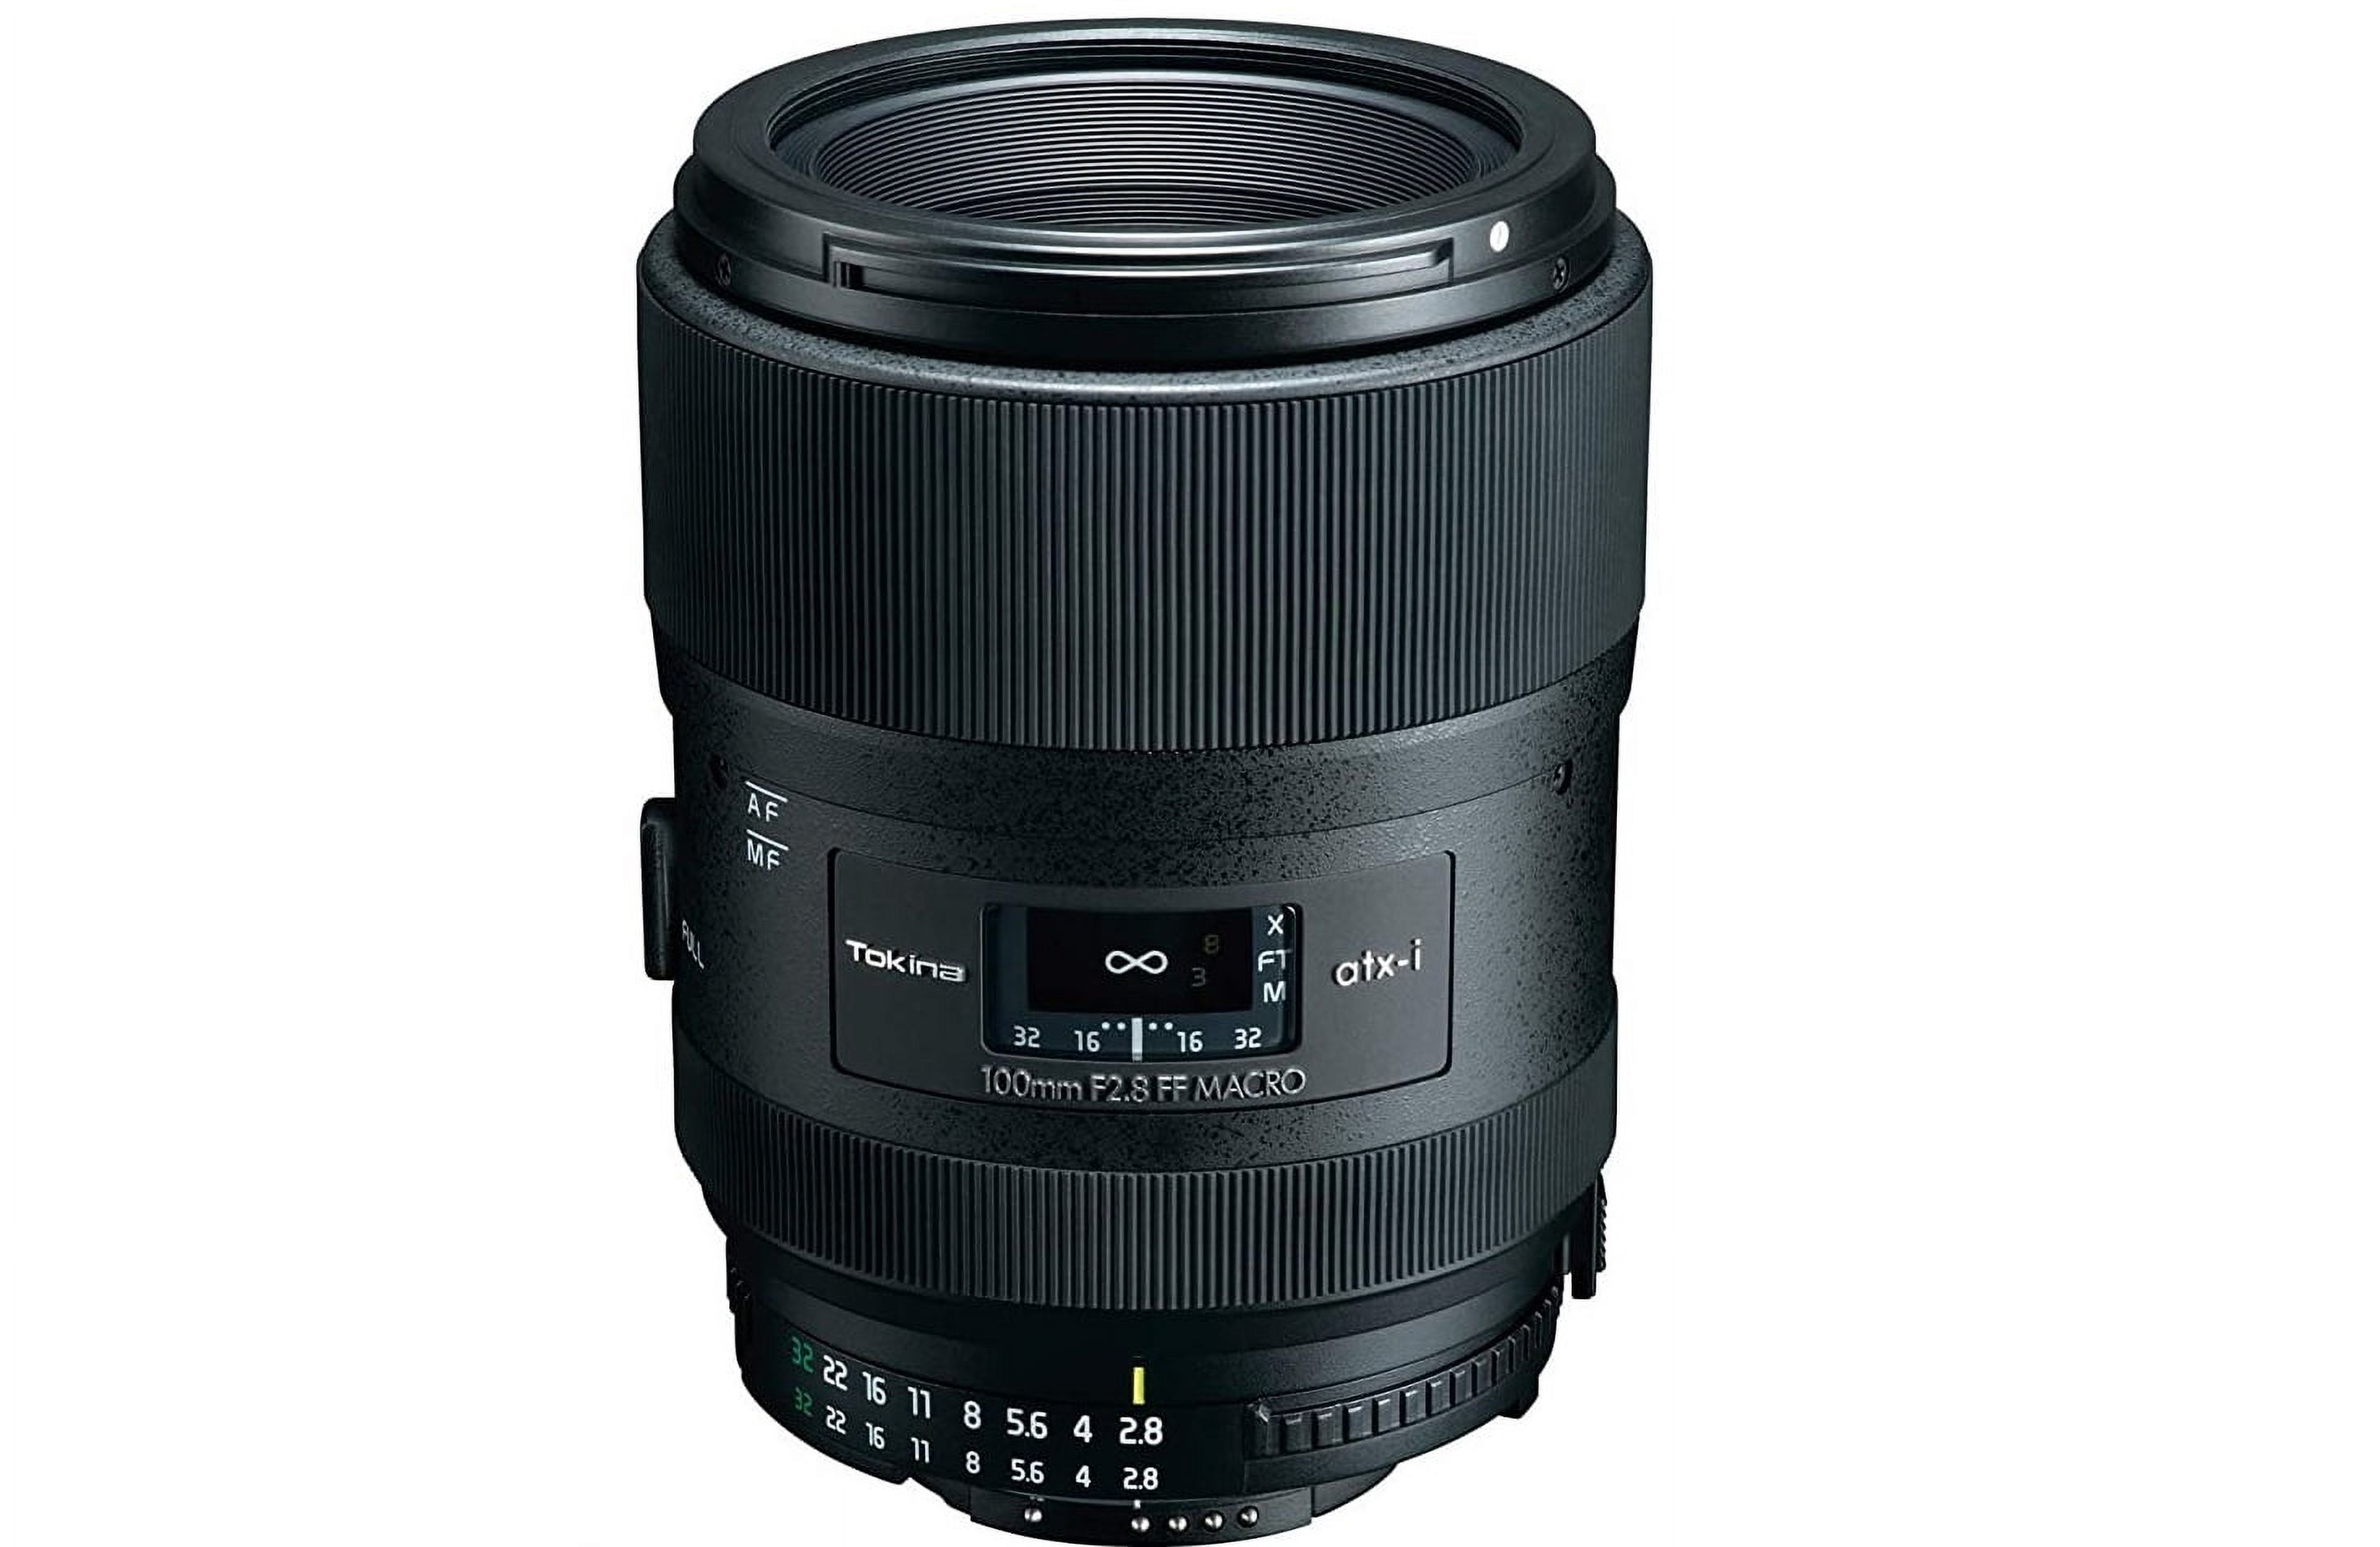 atx-i 100mm f/2.8 Macro Lens for Nikon F - image 3 of 4